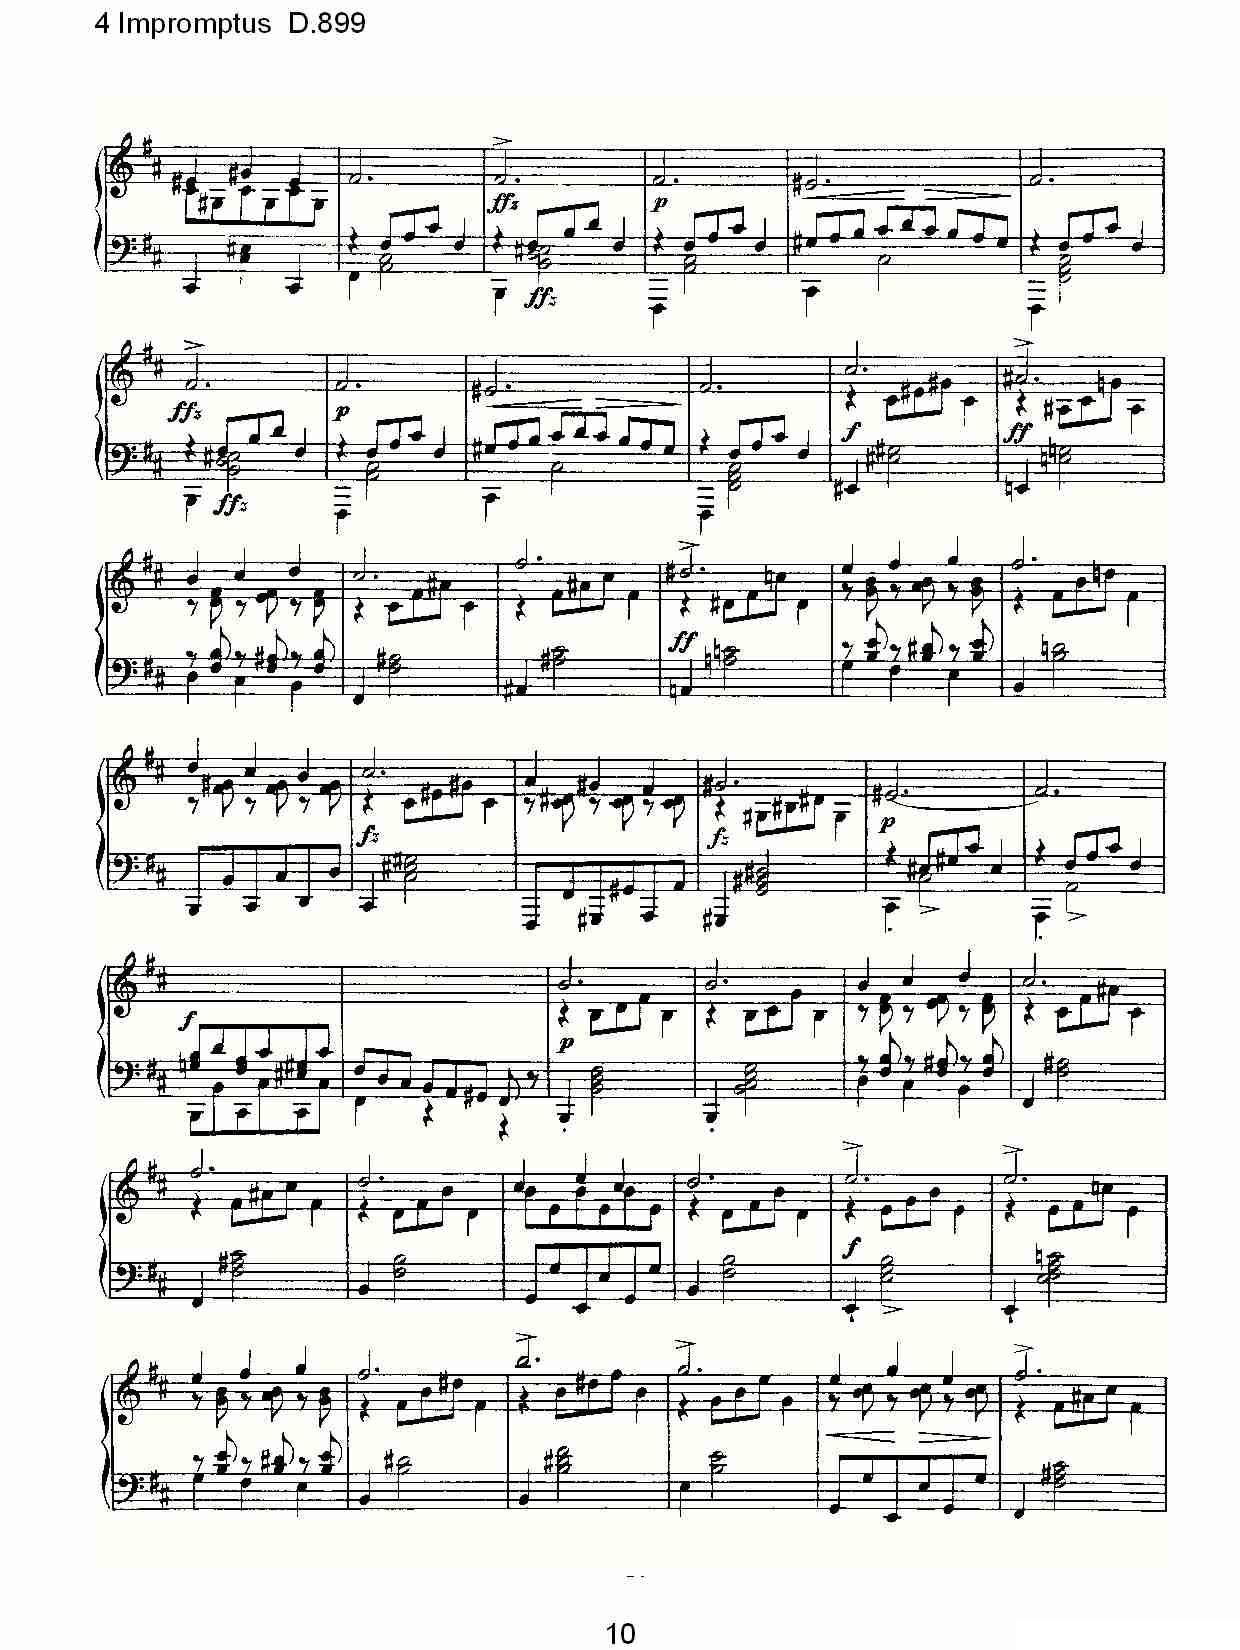 4 Impromptus D.899（4人即兴演奏 D.899）钢琴曲谱（图10）